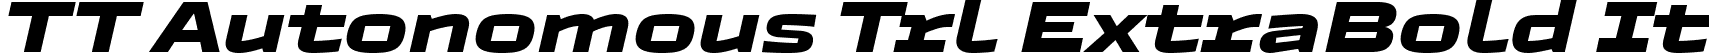 TT Autonomous Trl ExtraBold It font | TT-Autonomous-Trial-ExtraBold-Italic.ttf